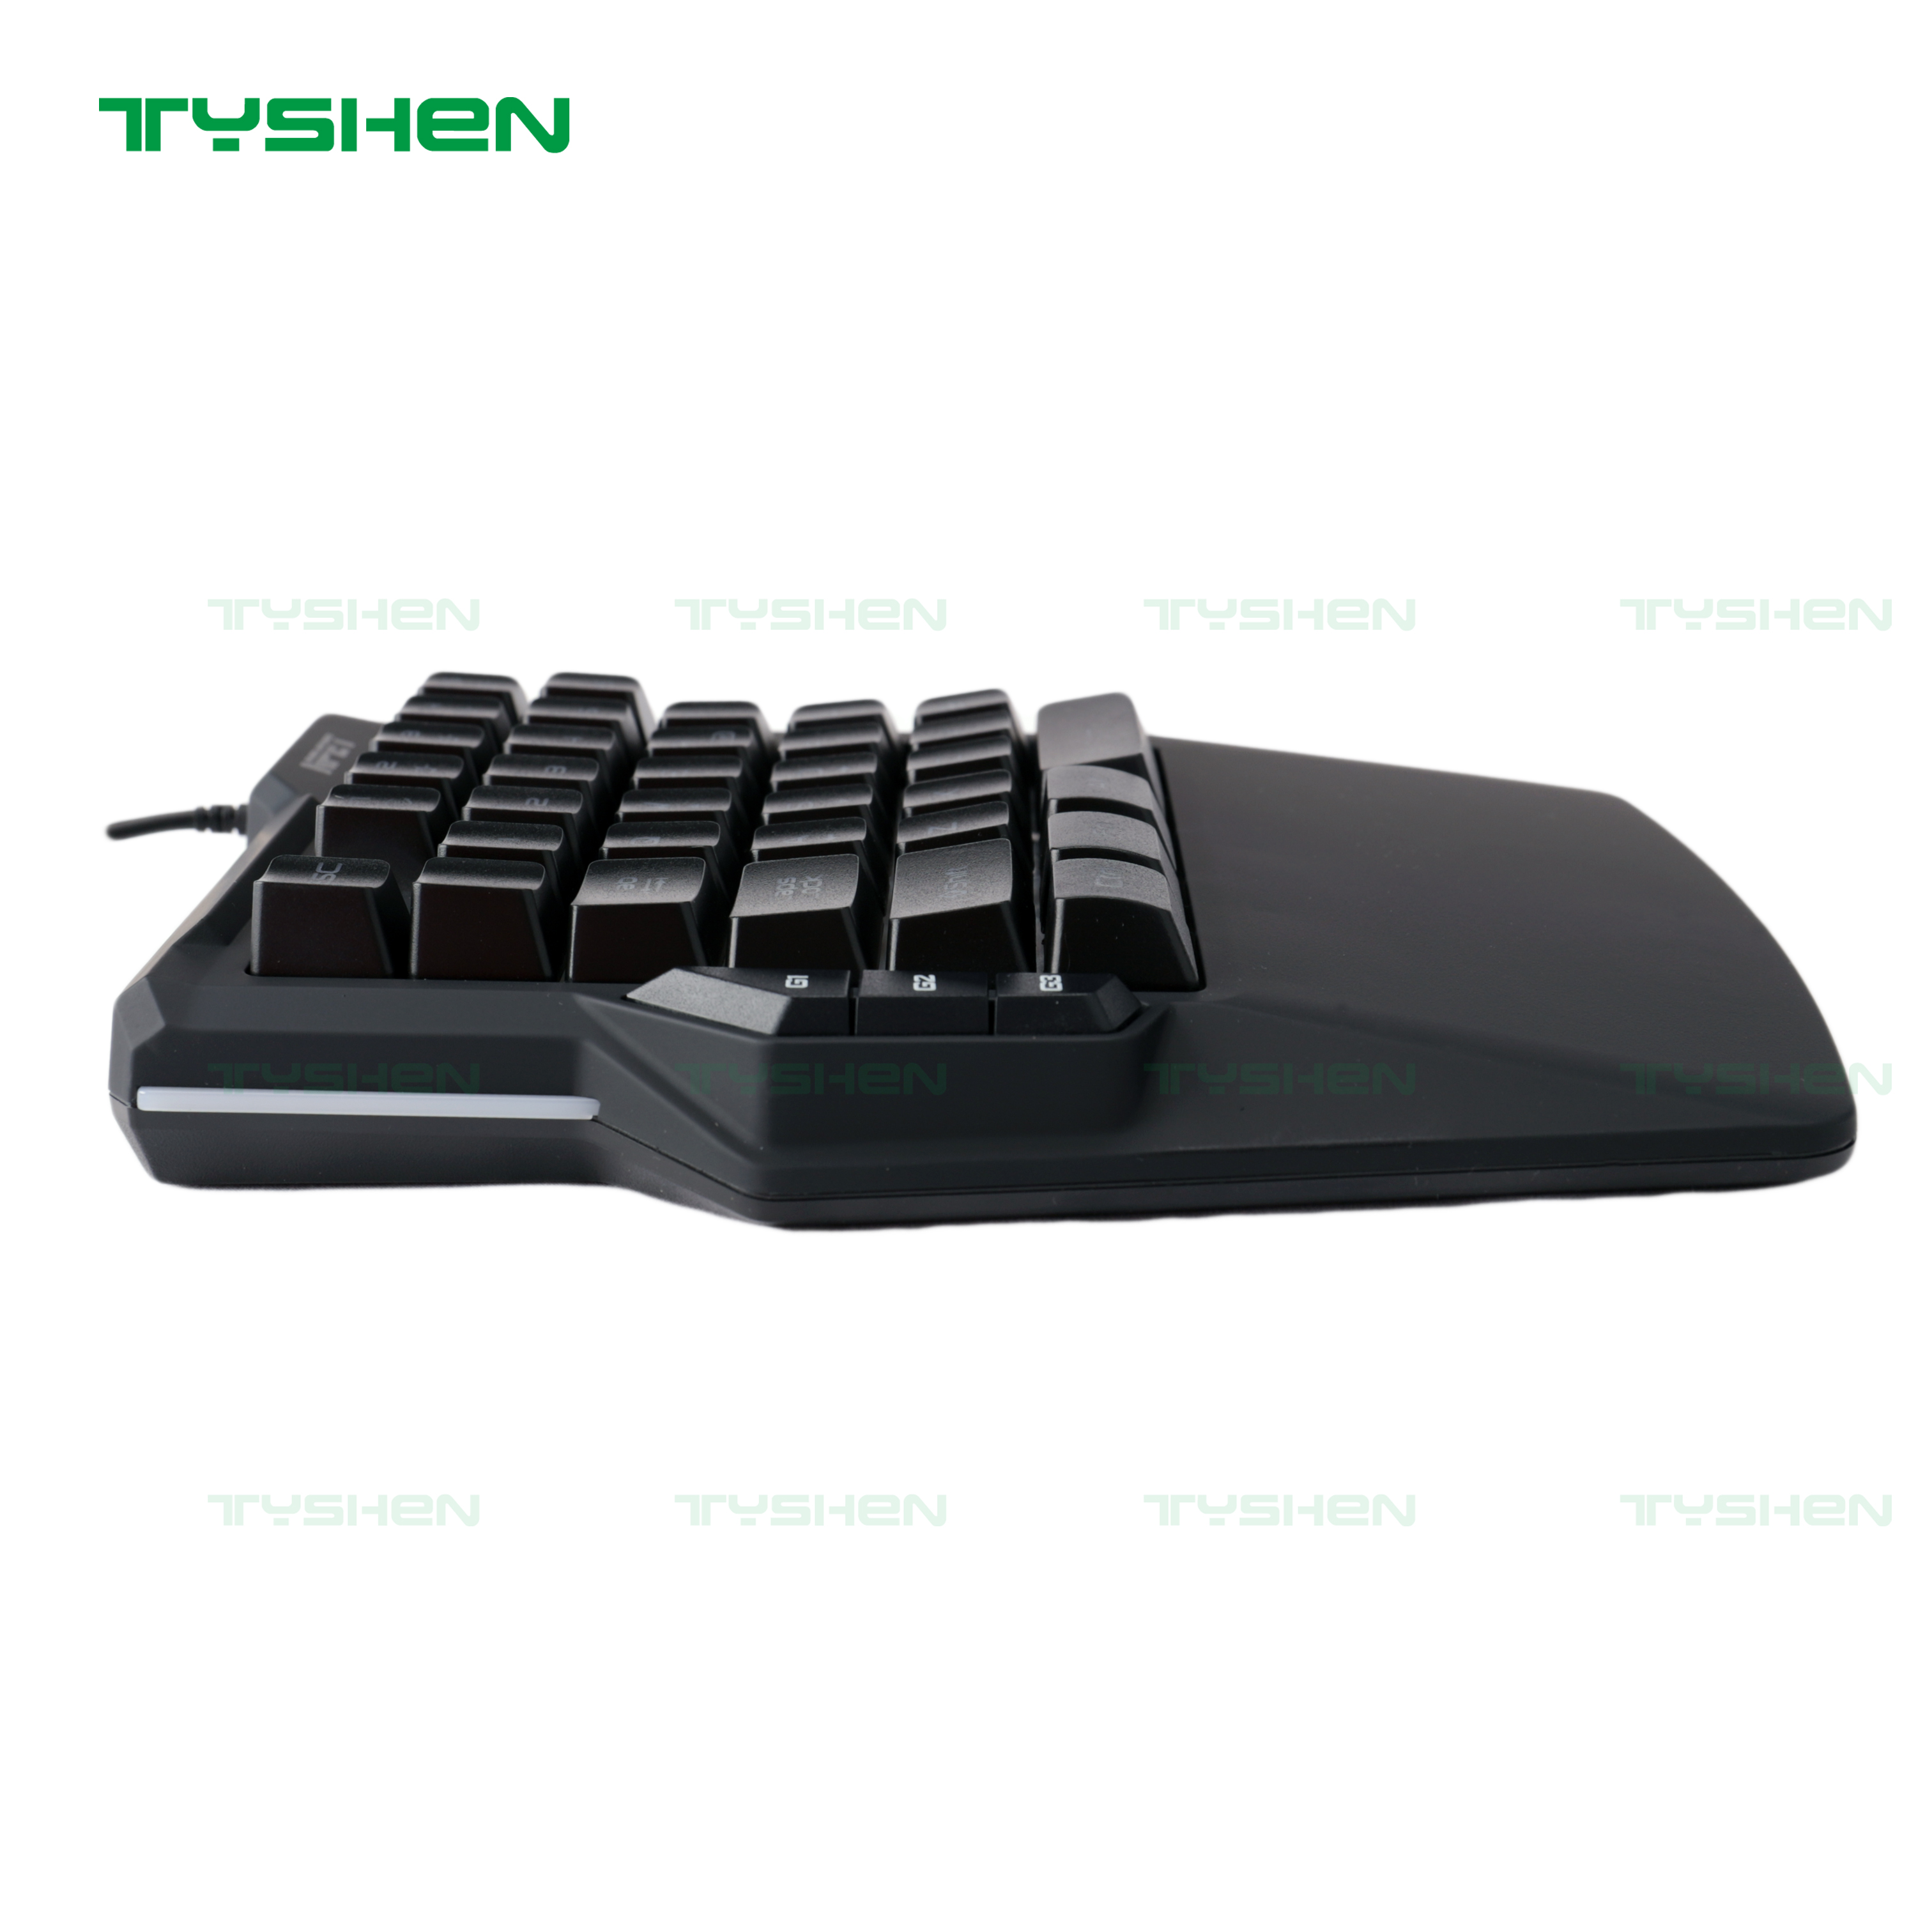 One-Hand Gaming Keyboard,3 Keys Programmable